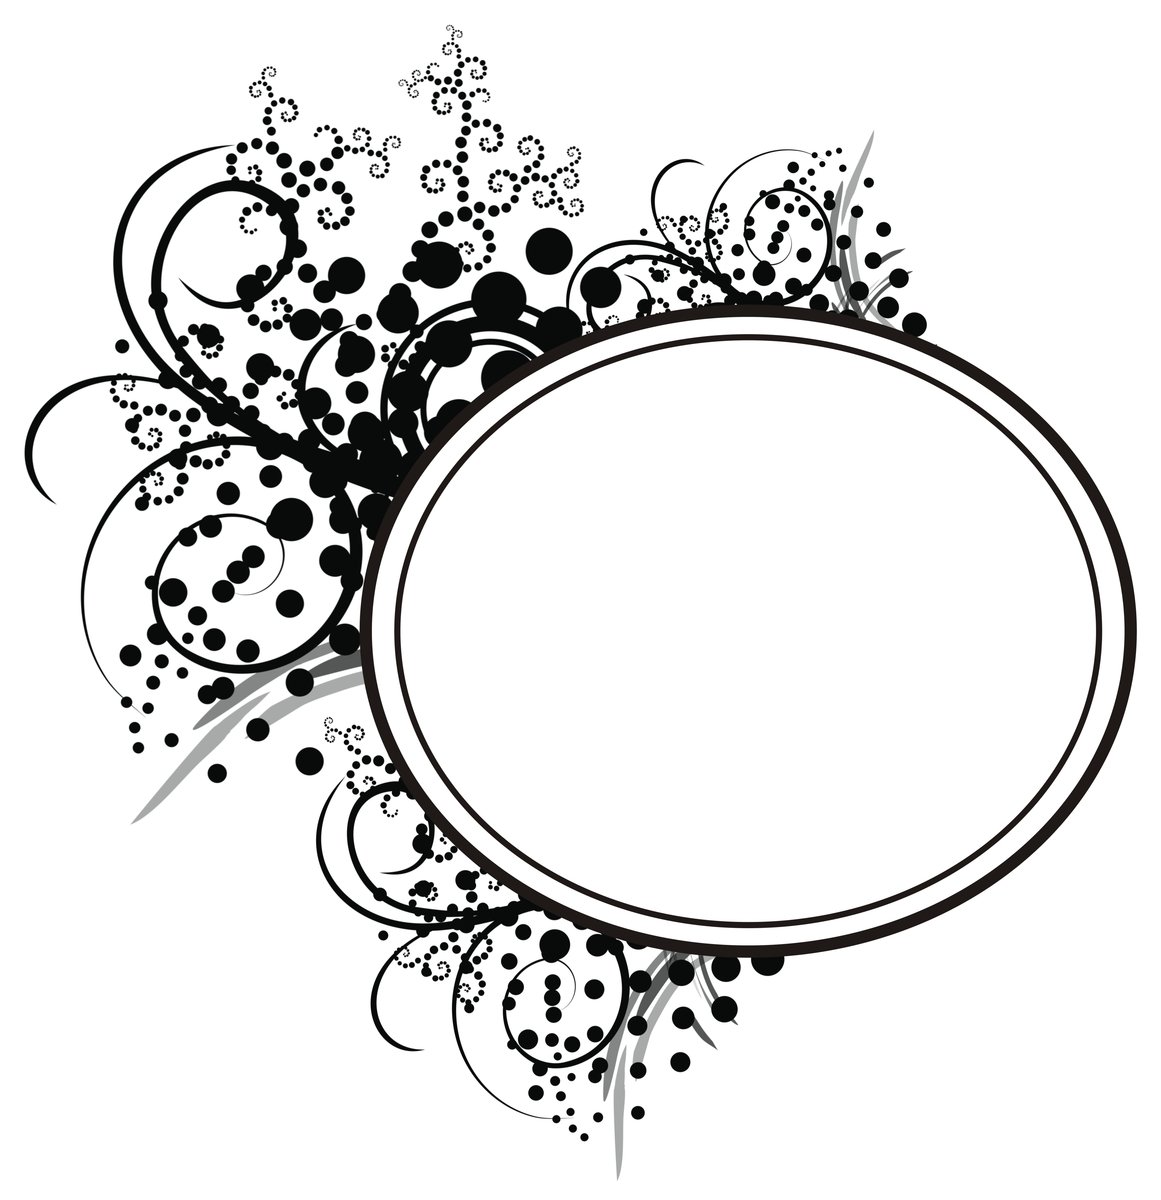 an ornate, black and white circular frame